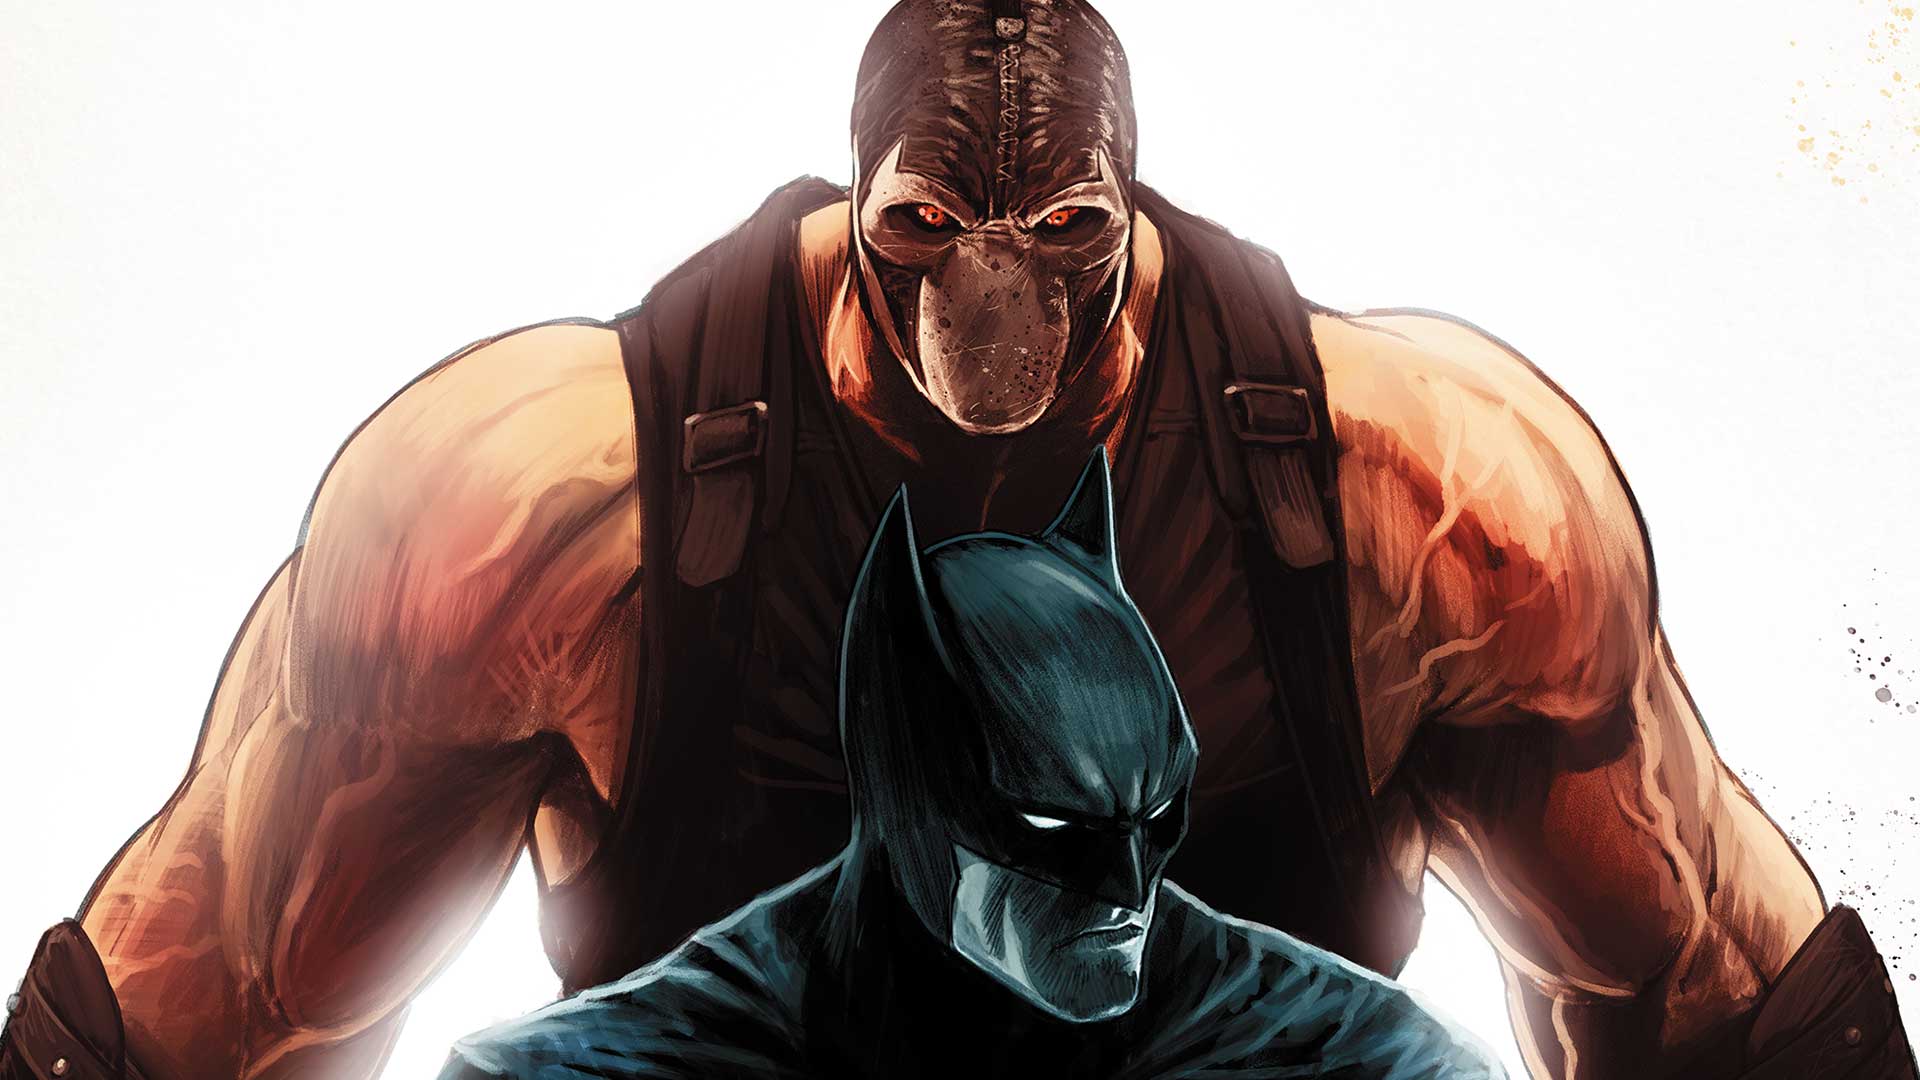 Bane looking menacing on the cover of Batman